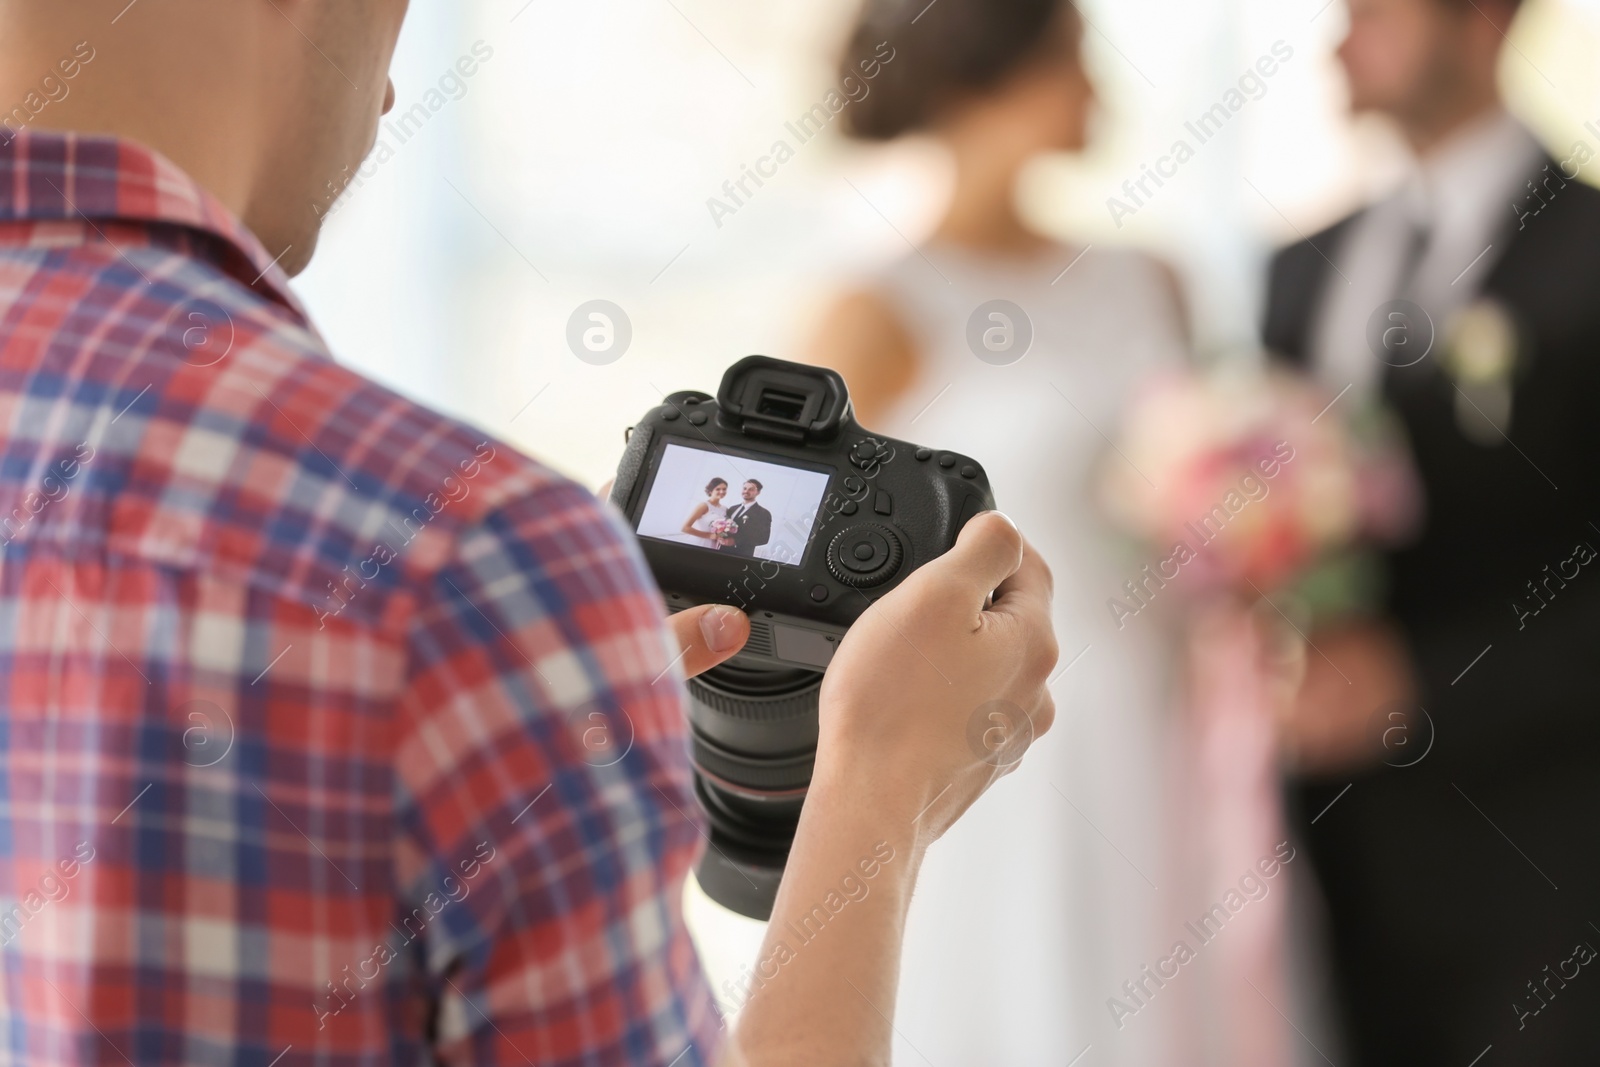 Photo of Professional photographer taking photo of wedding couple in studio